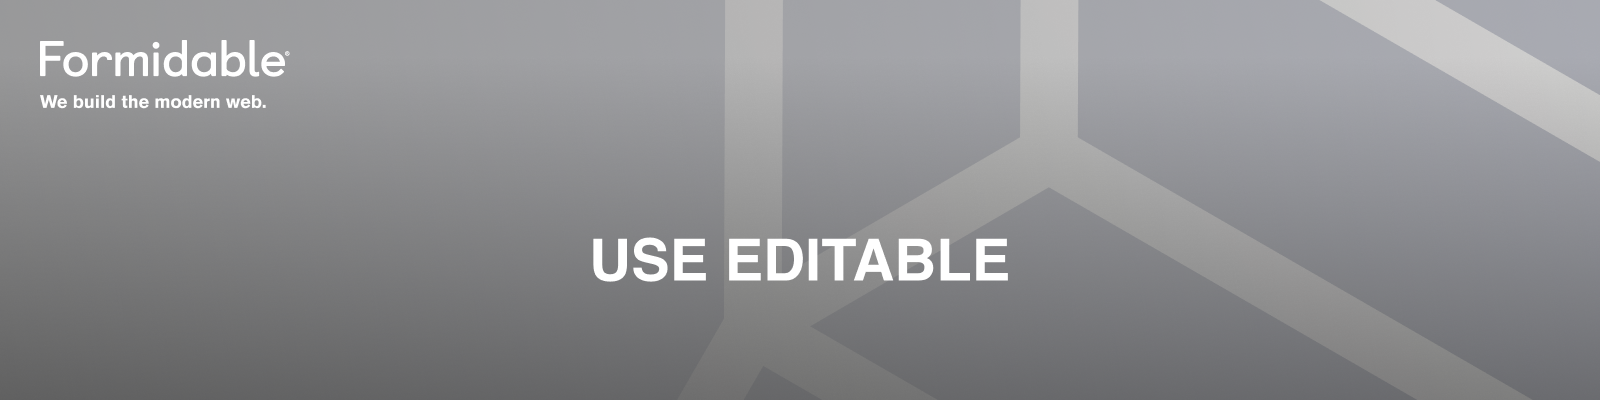 Use Editable — Formidable, We build the modern web